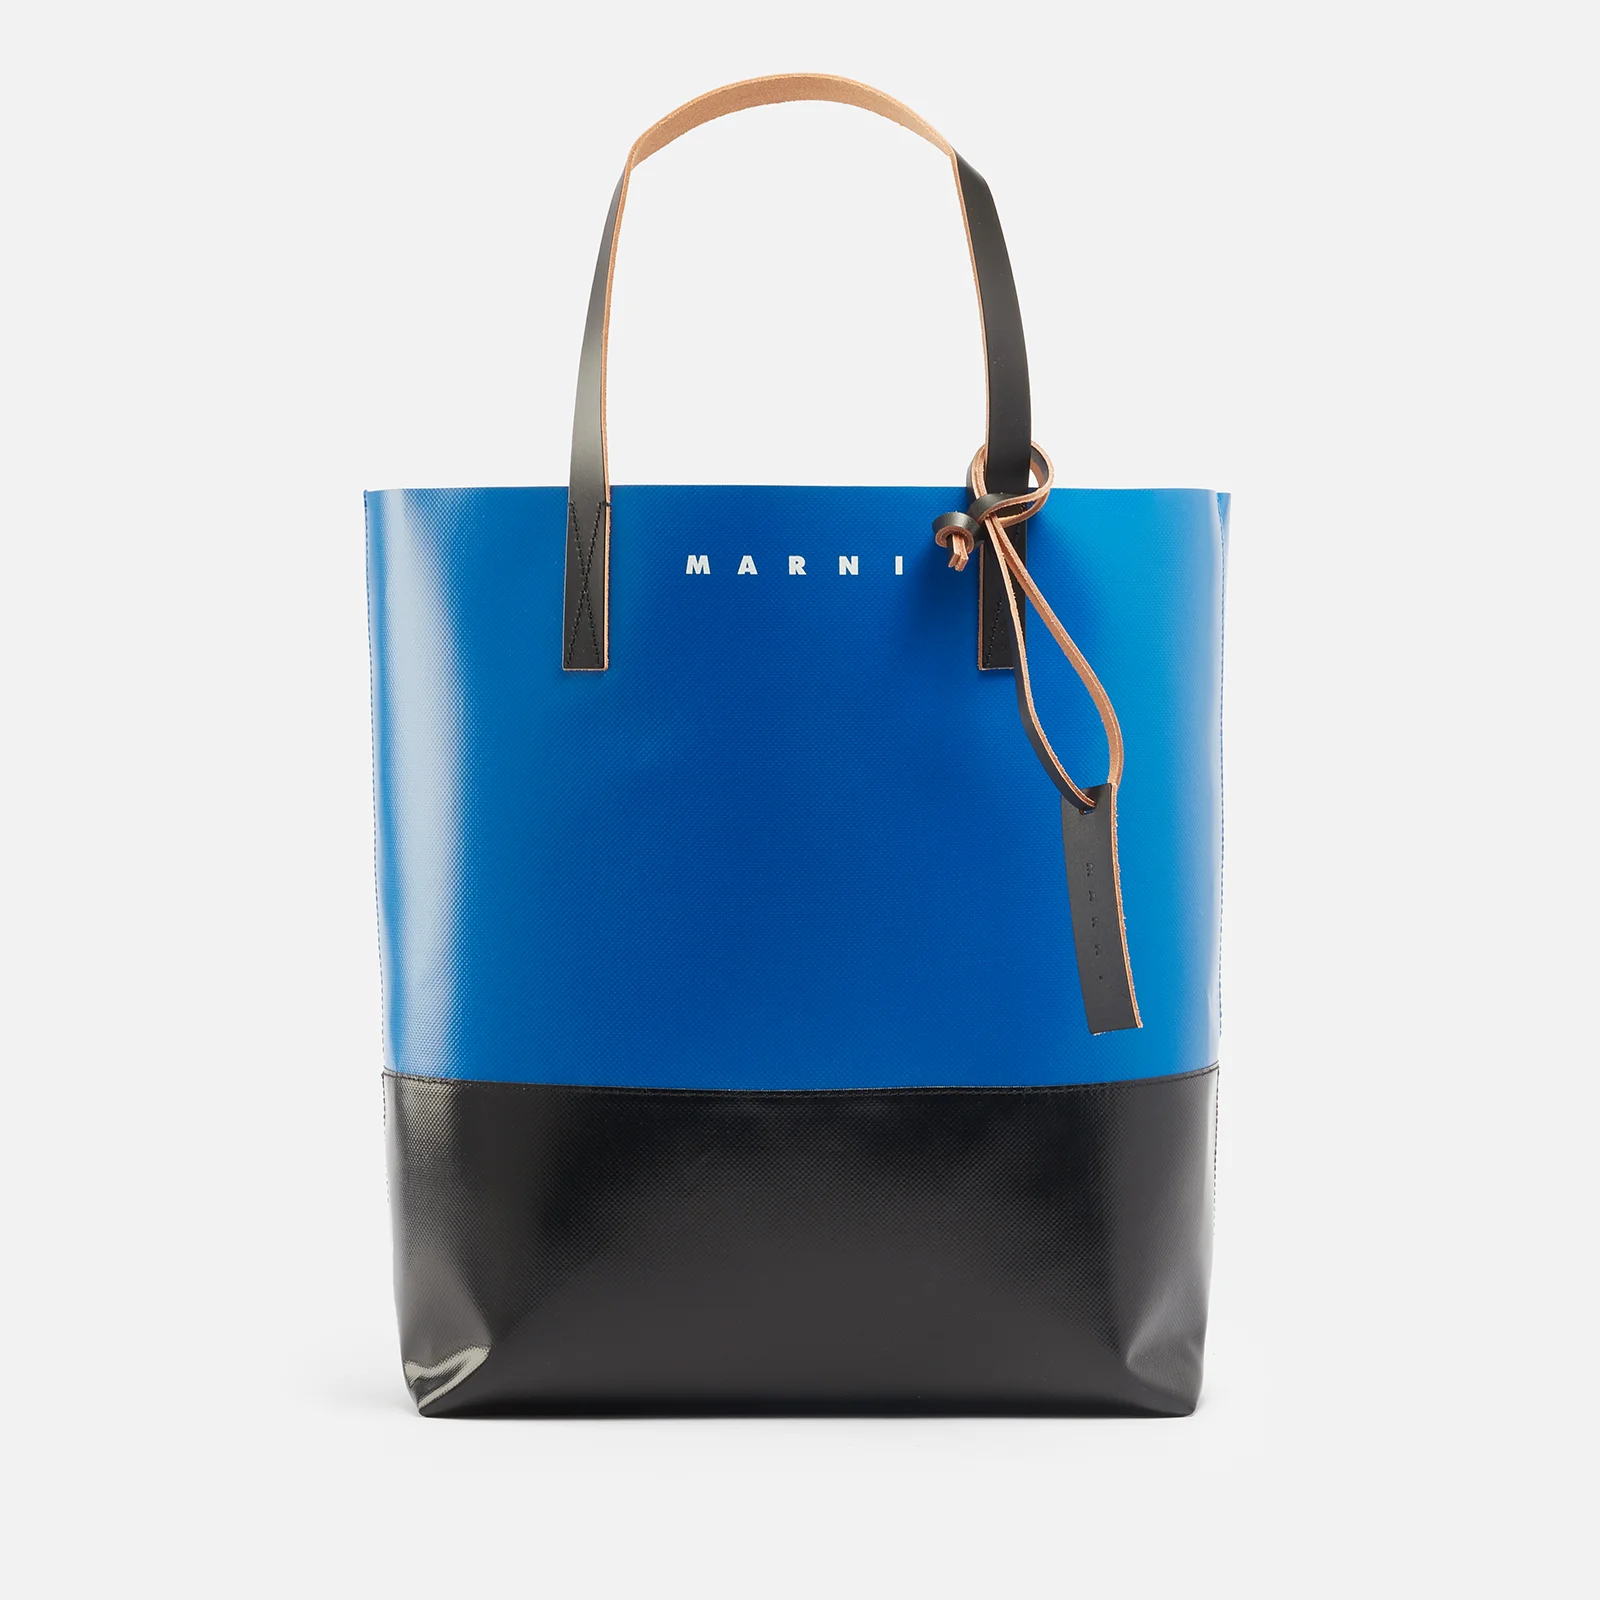 Marni Men's Tribeca Shopping Bag - Royal Blue/Black Image 1